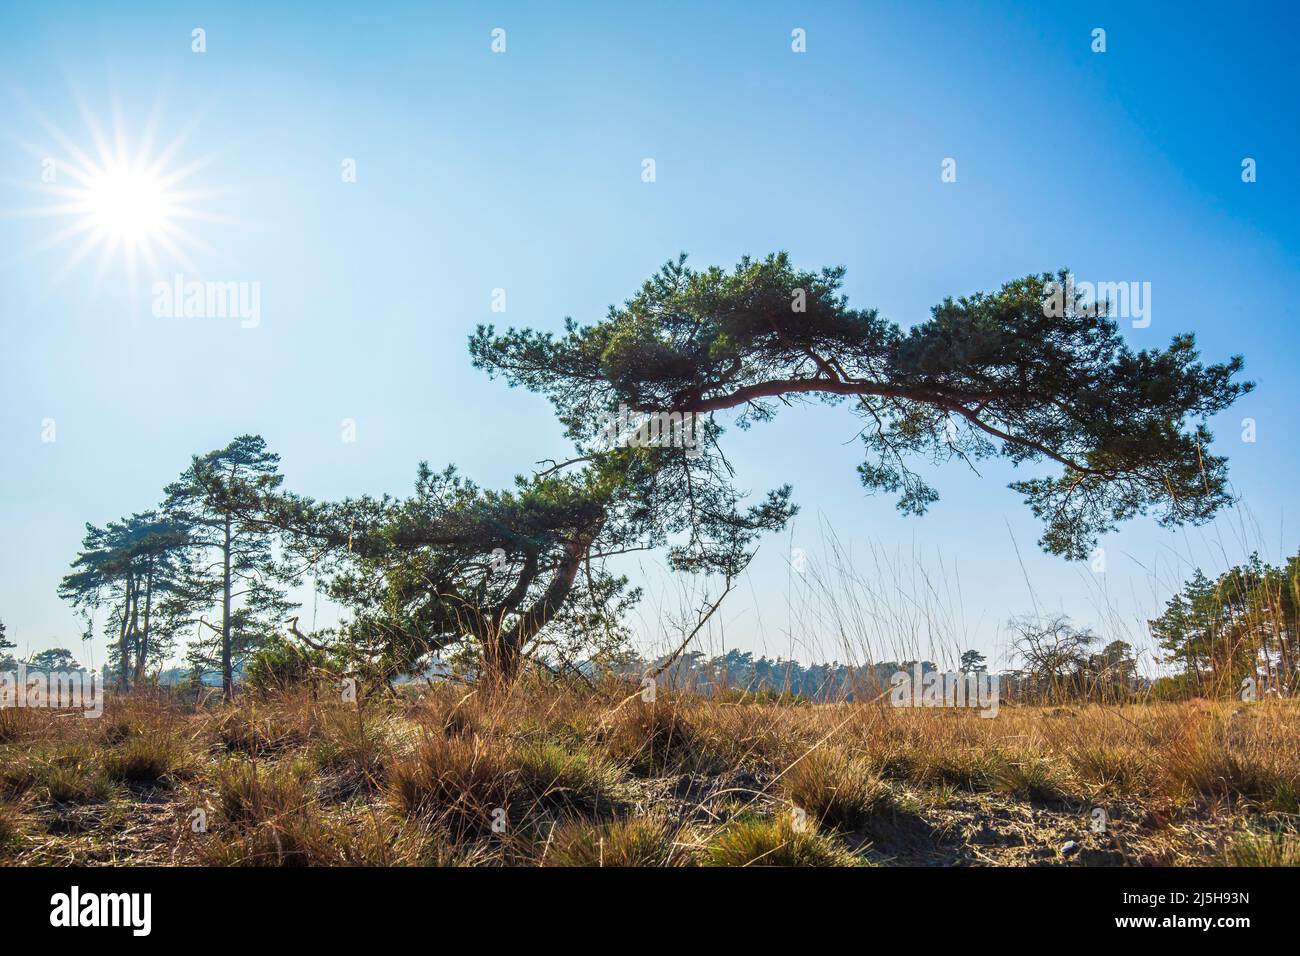 Desolate Wald Landcape Nationalpark de Hoge Veluwe, Holland Stockfoto